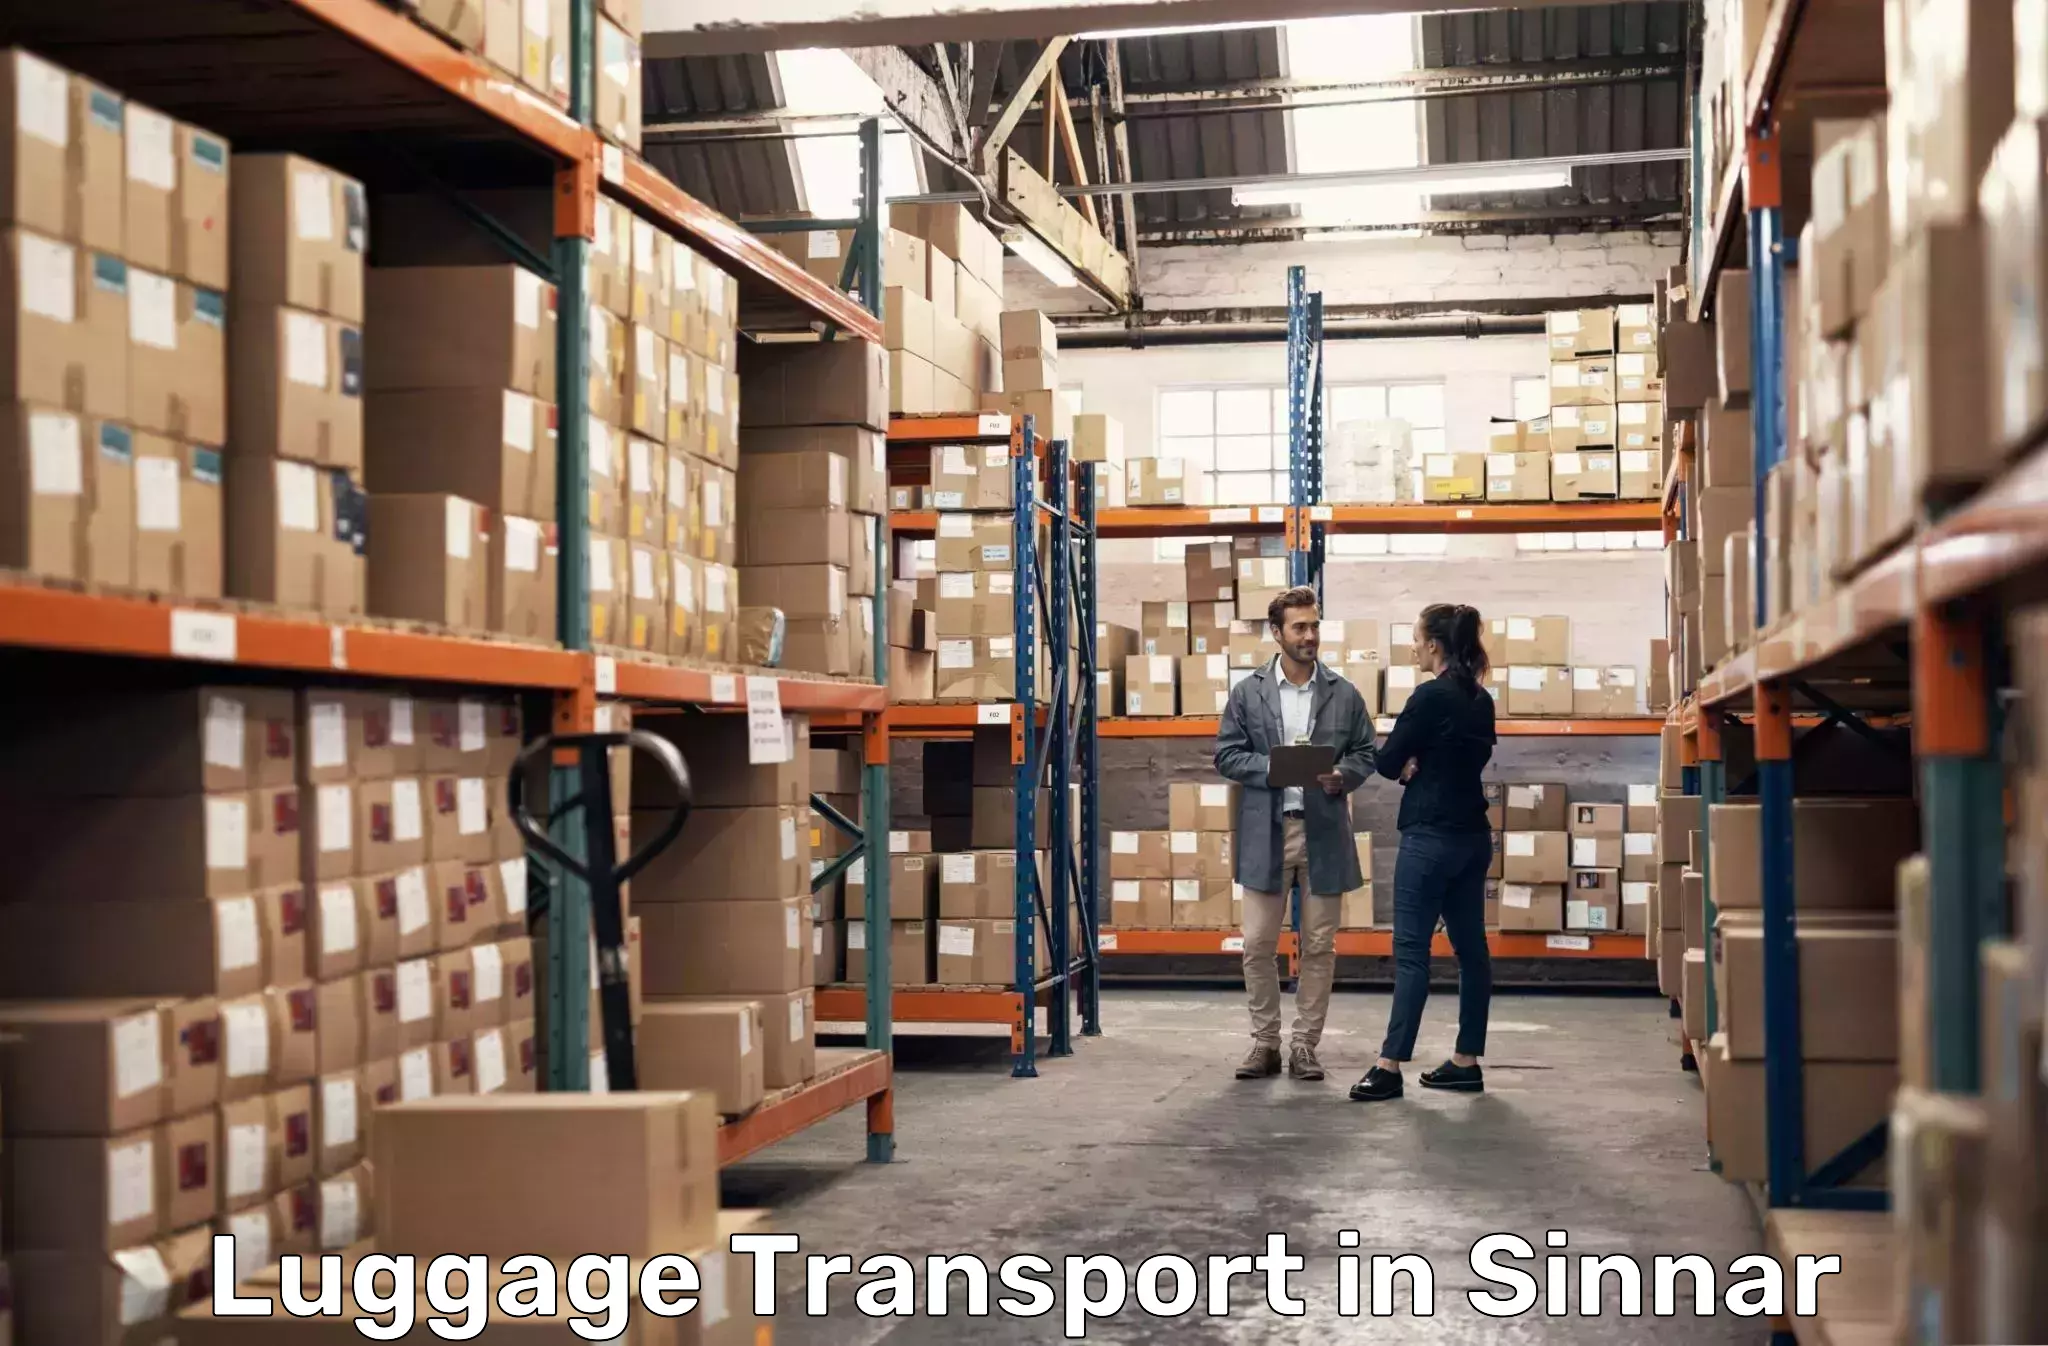 Luggage transport solutions in Sinnar